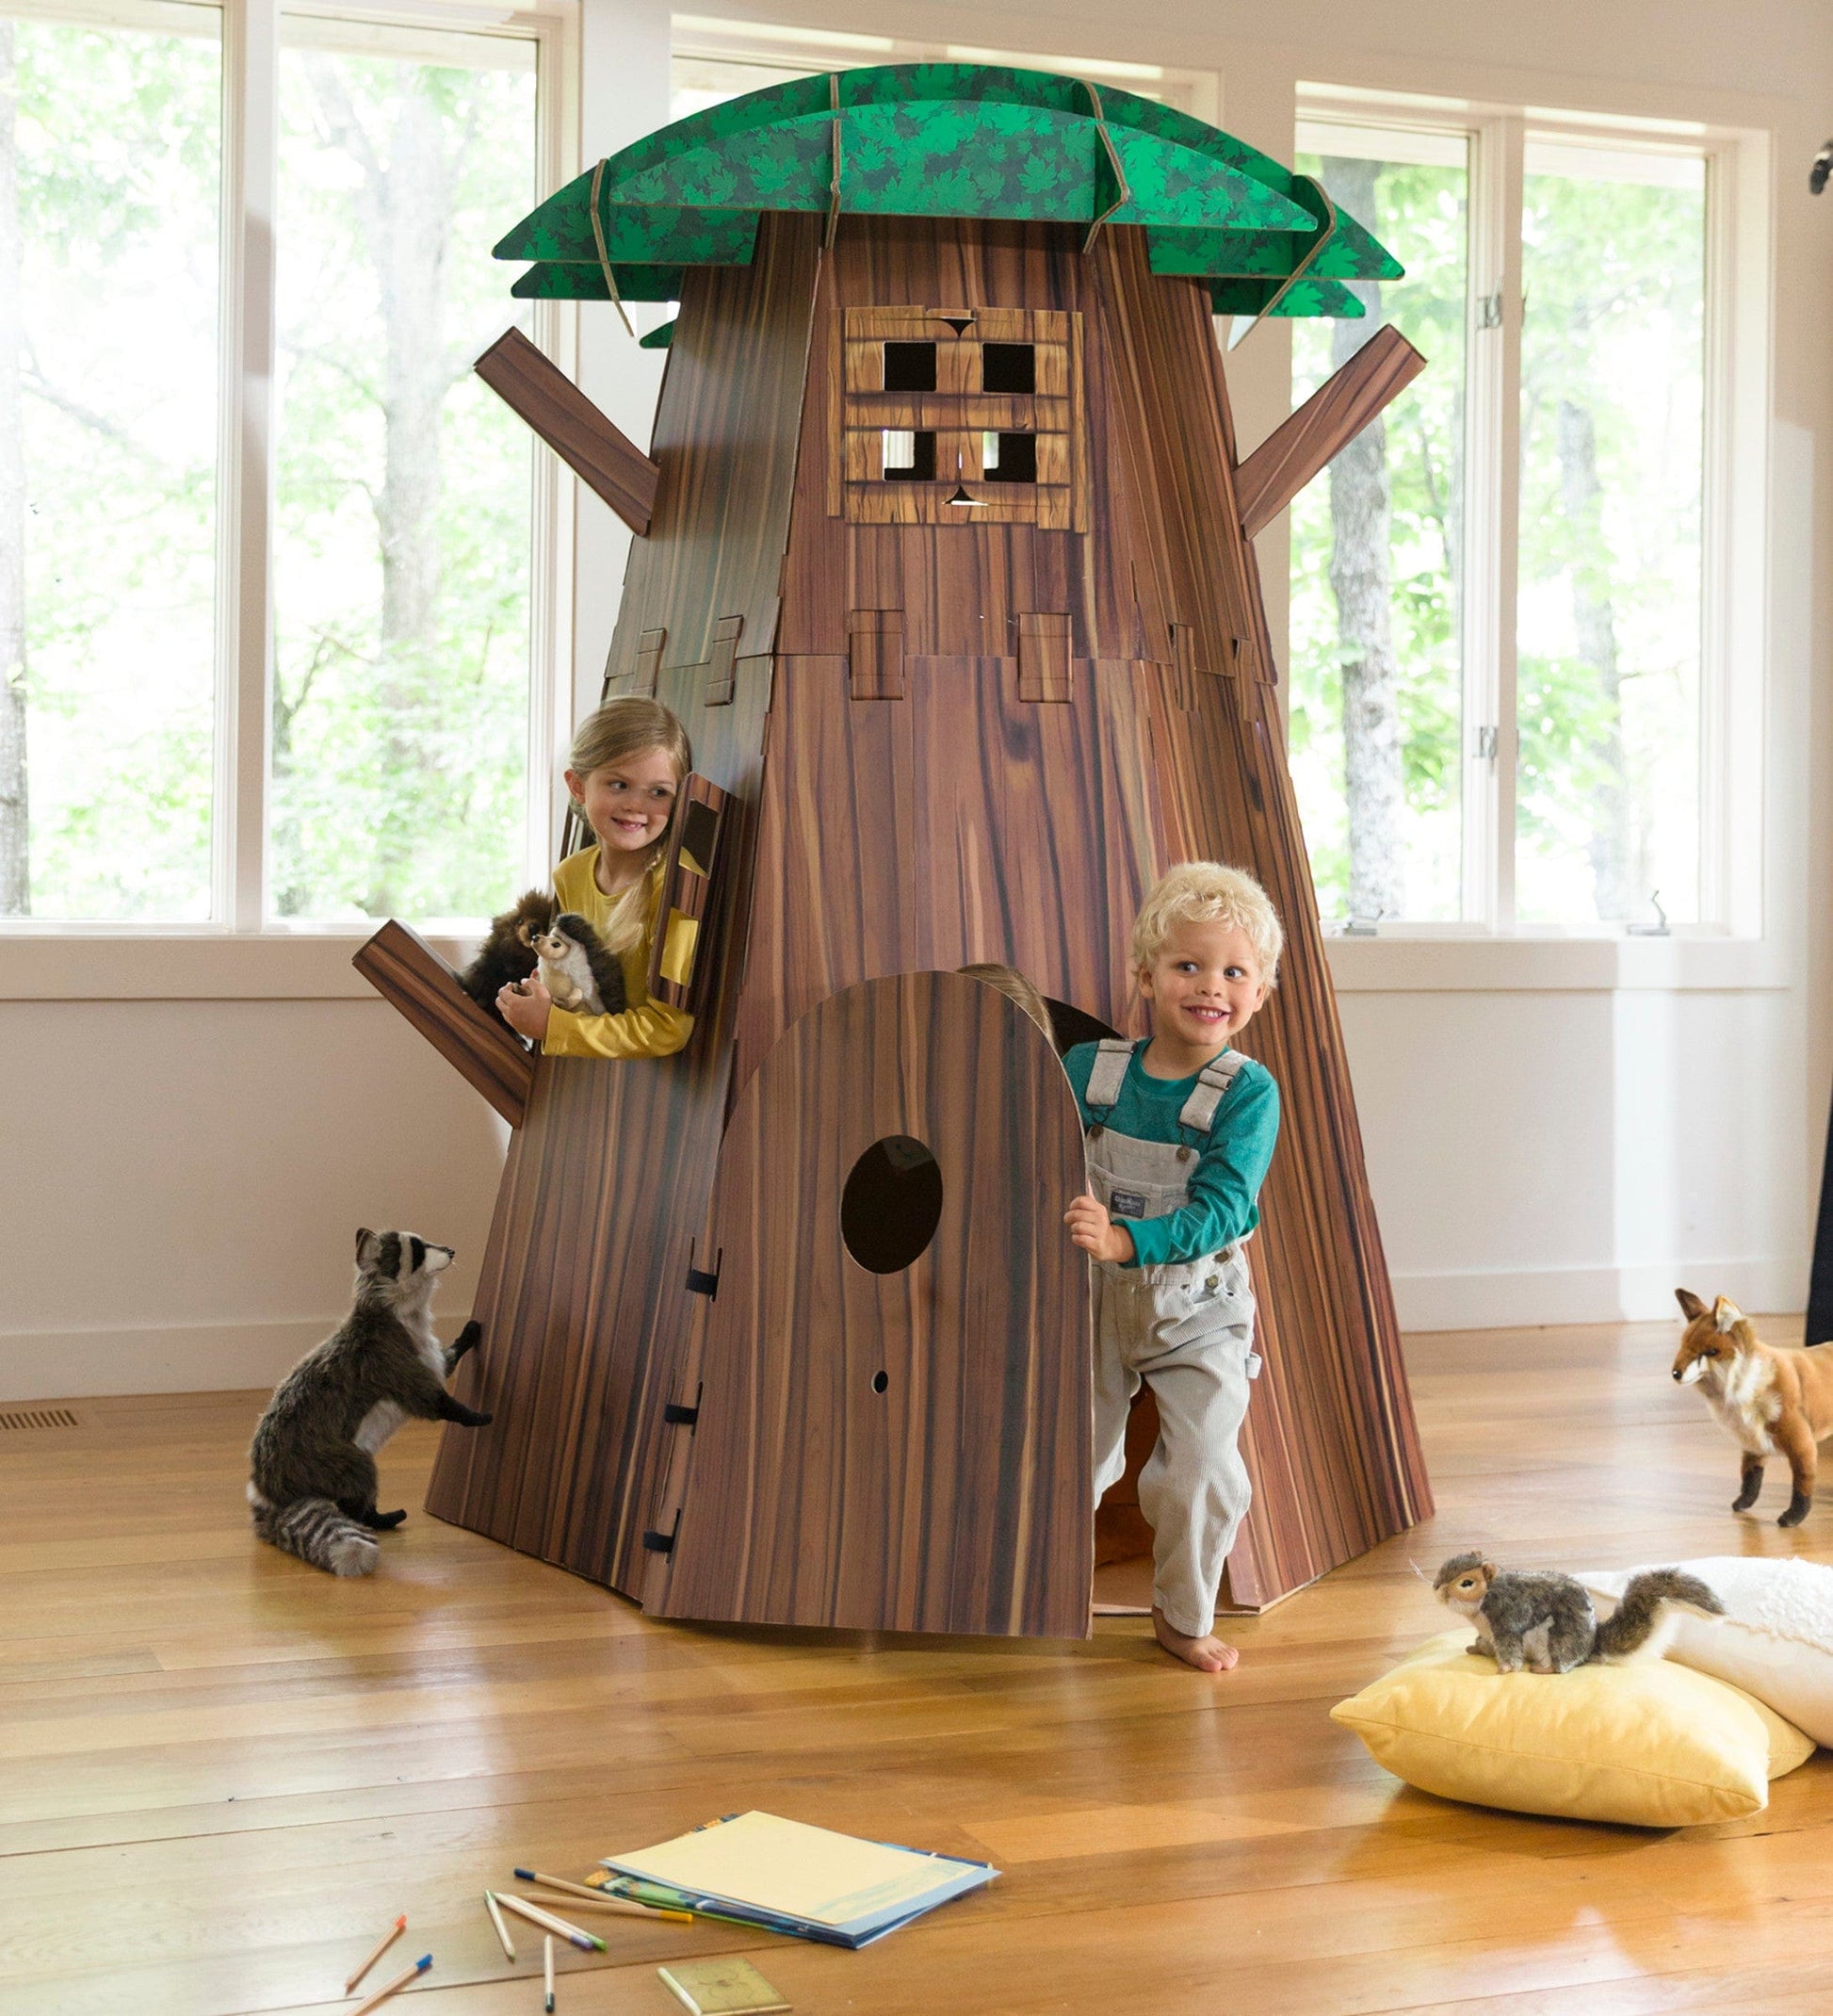 Constructagons Big Tree Fort Indoor Fort-Building Kit